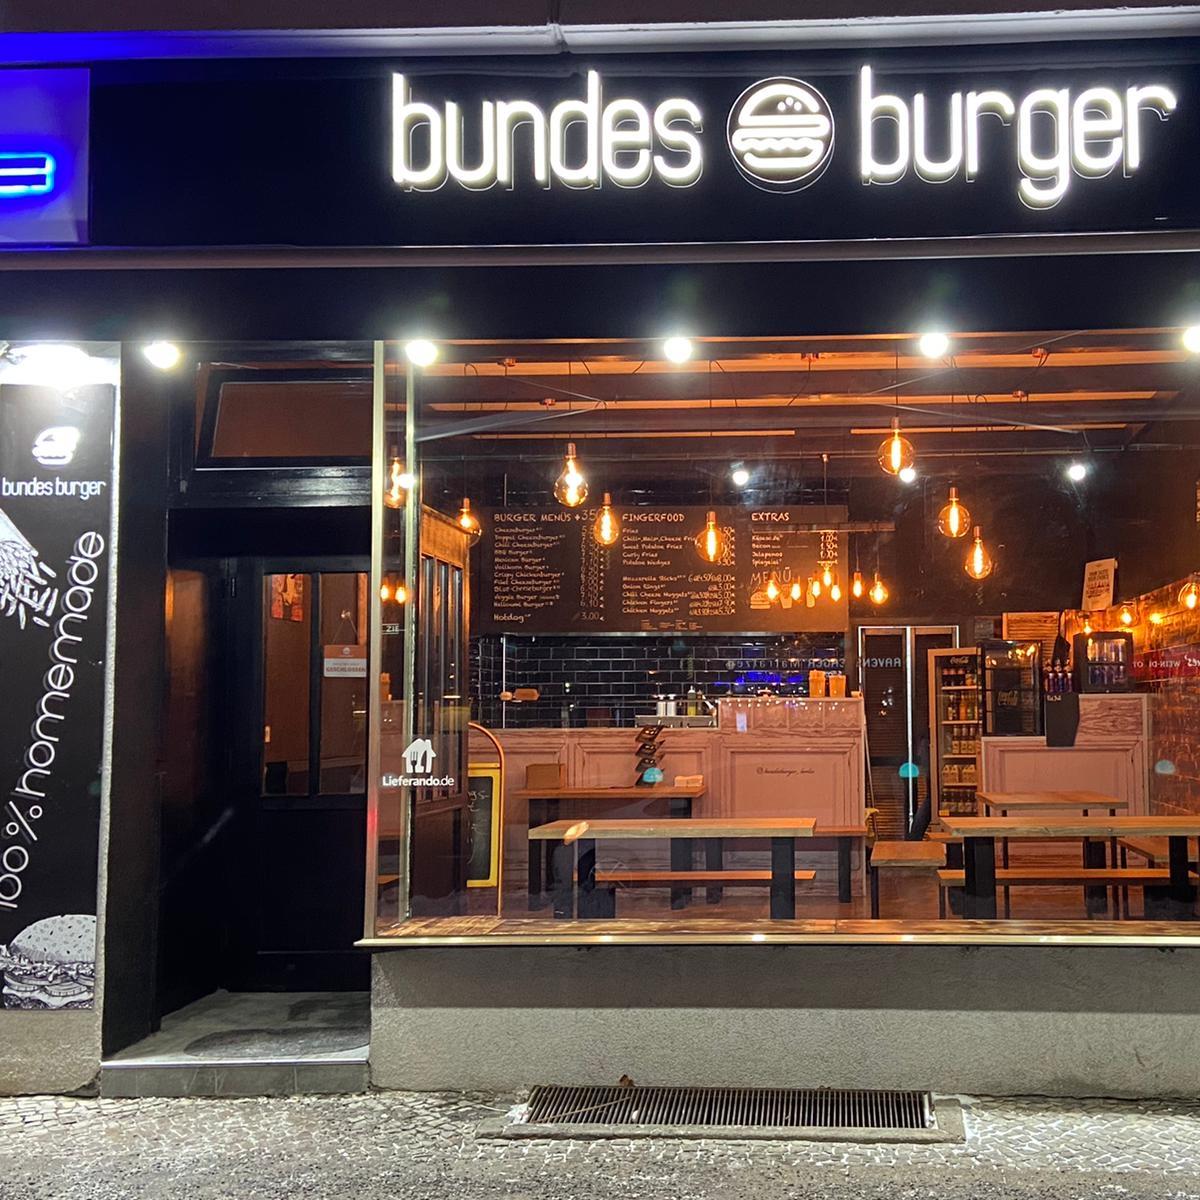 Restaurant "Bundes Burger" in Berlin